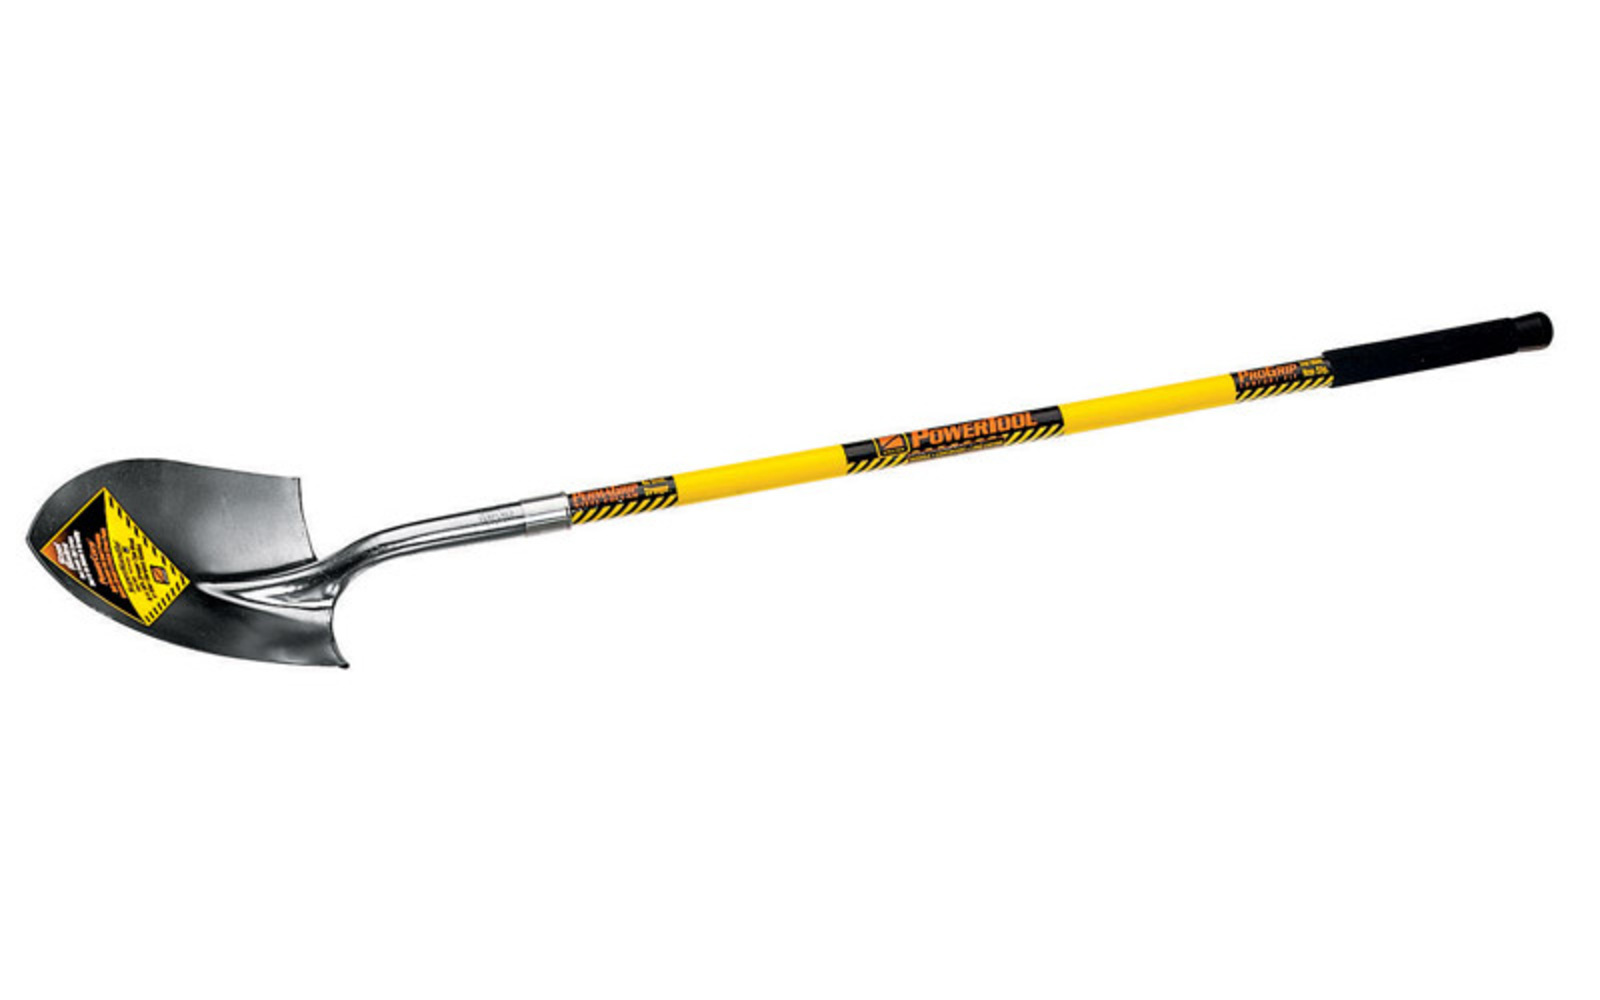 Structron Shovel Round Point Yellow Fiberglass Handle Cushion Grip - image 2 of 2